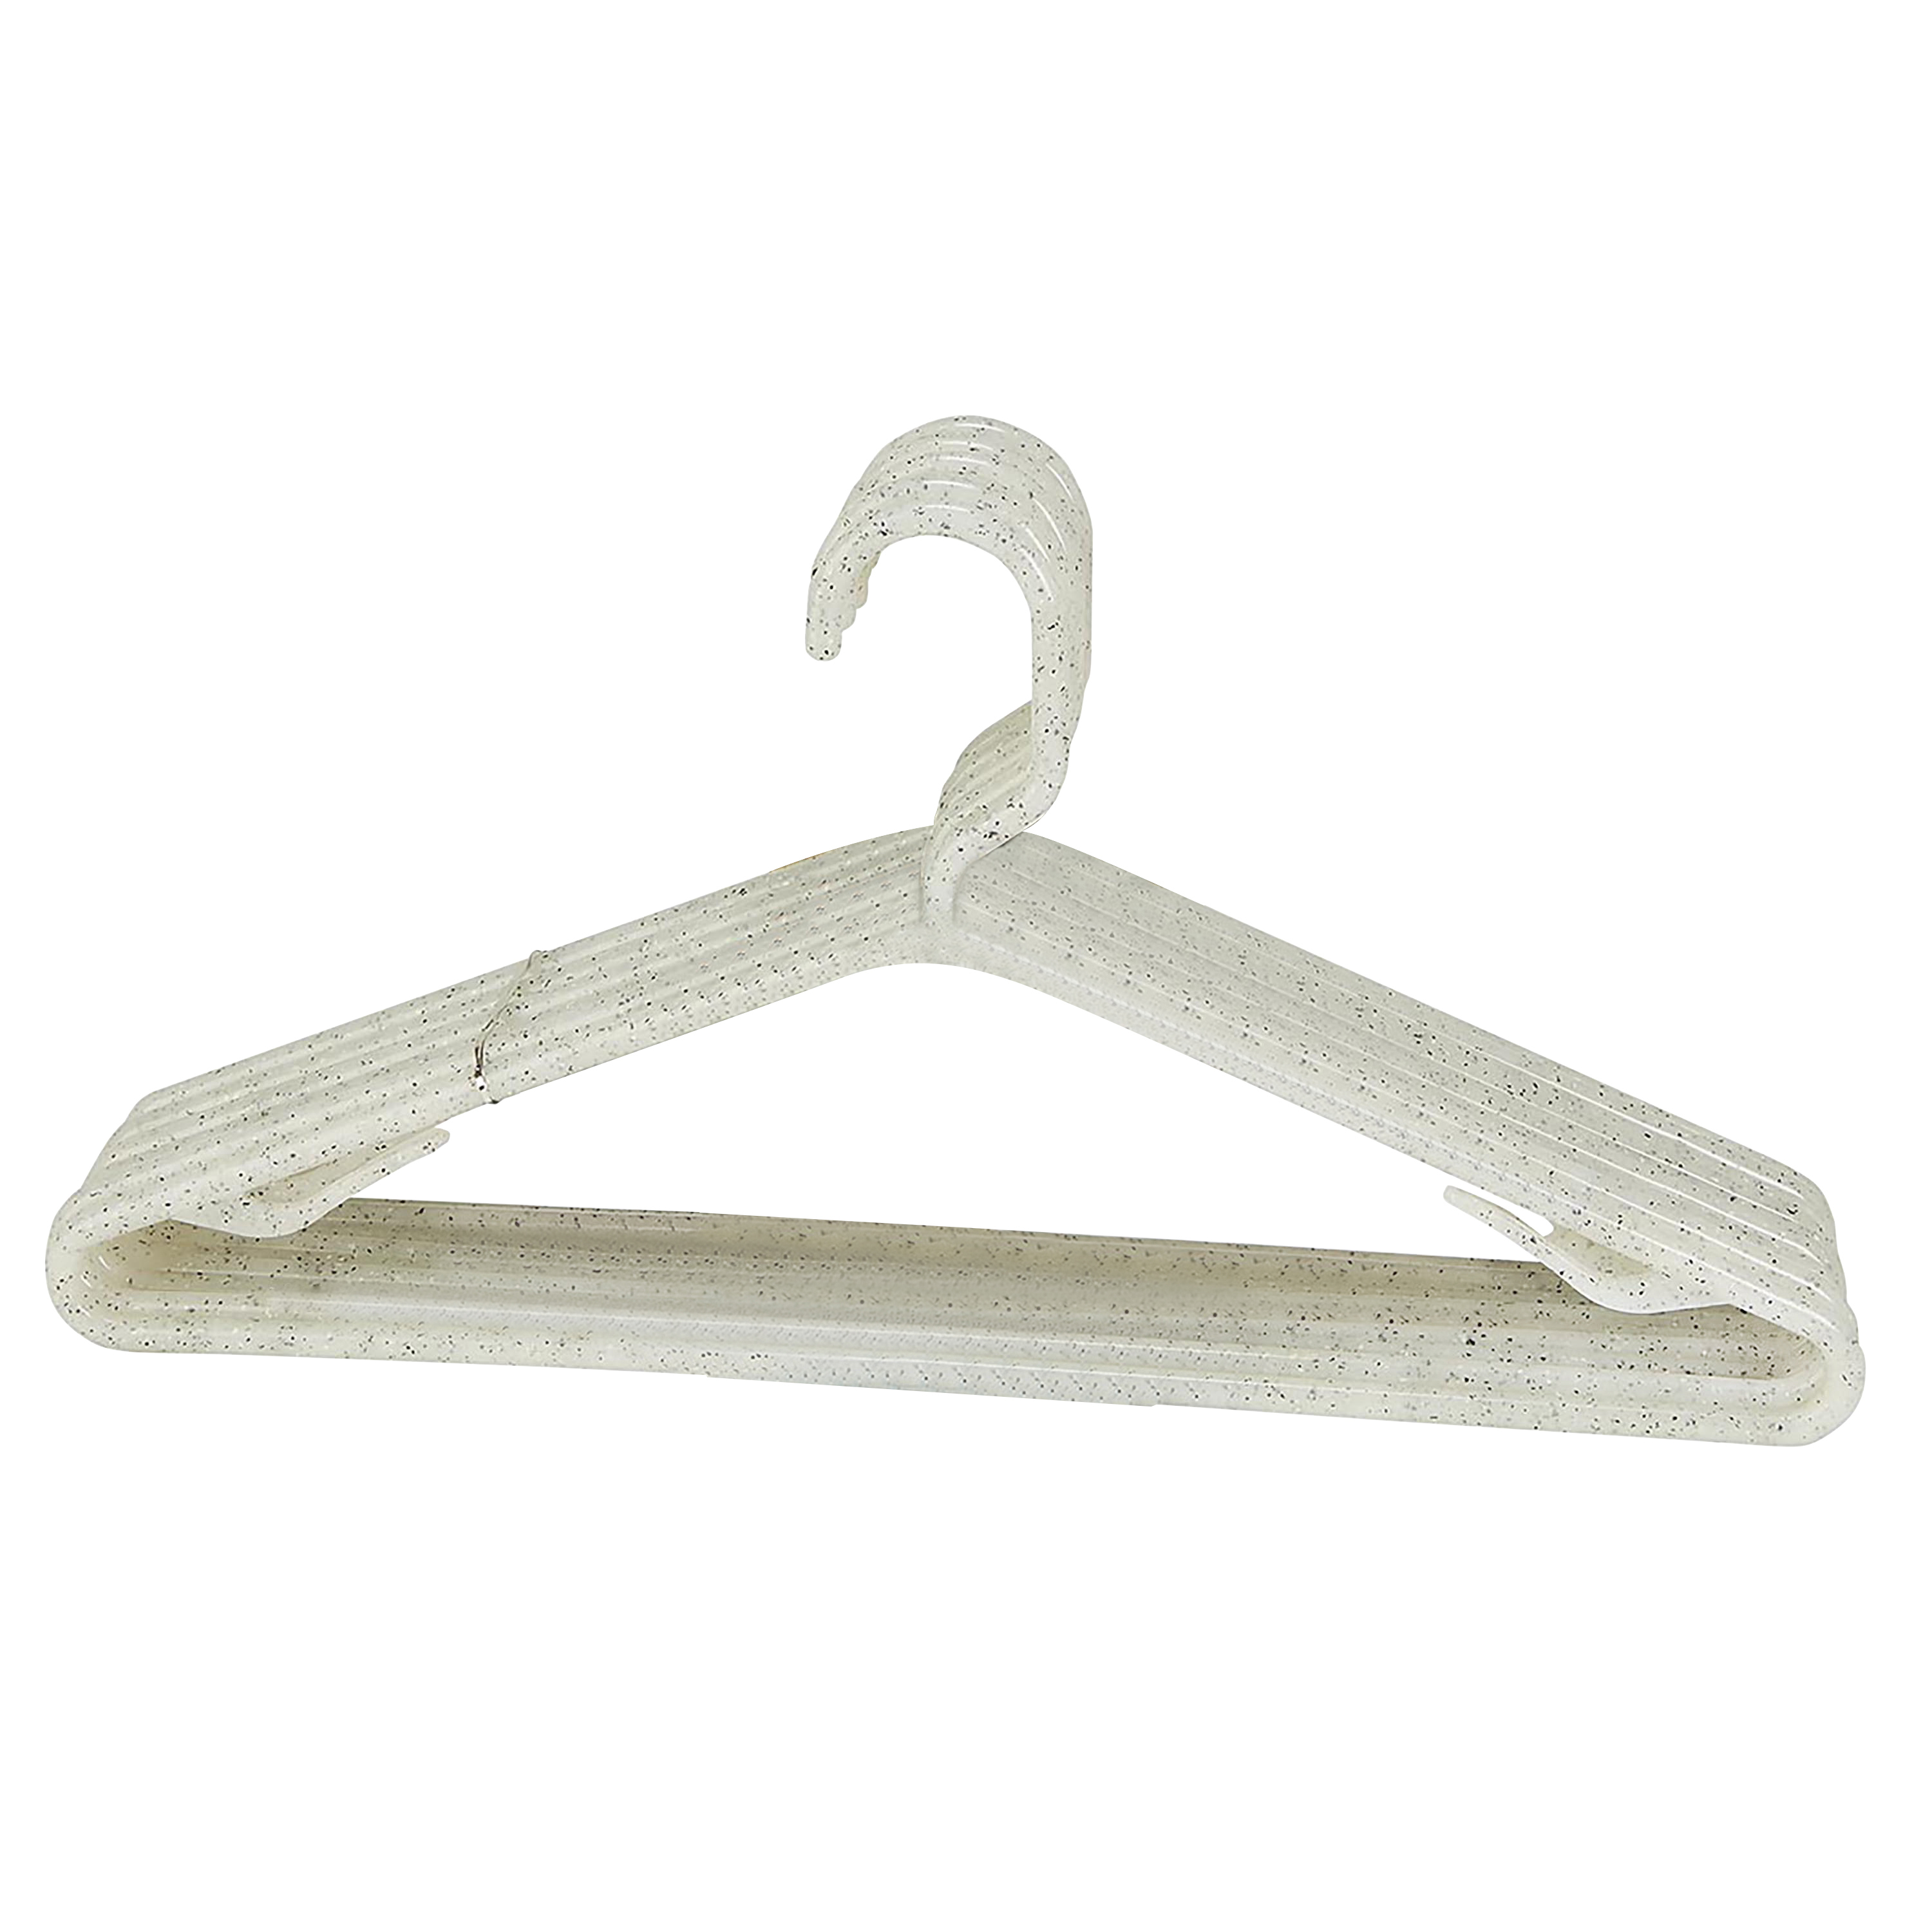 Simplify Granite Look Design Plastic Clothes Hangers, White, 10 Count - image 3 of 4